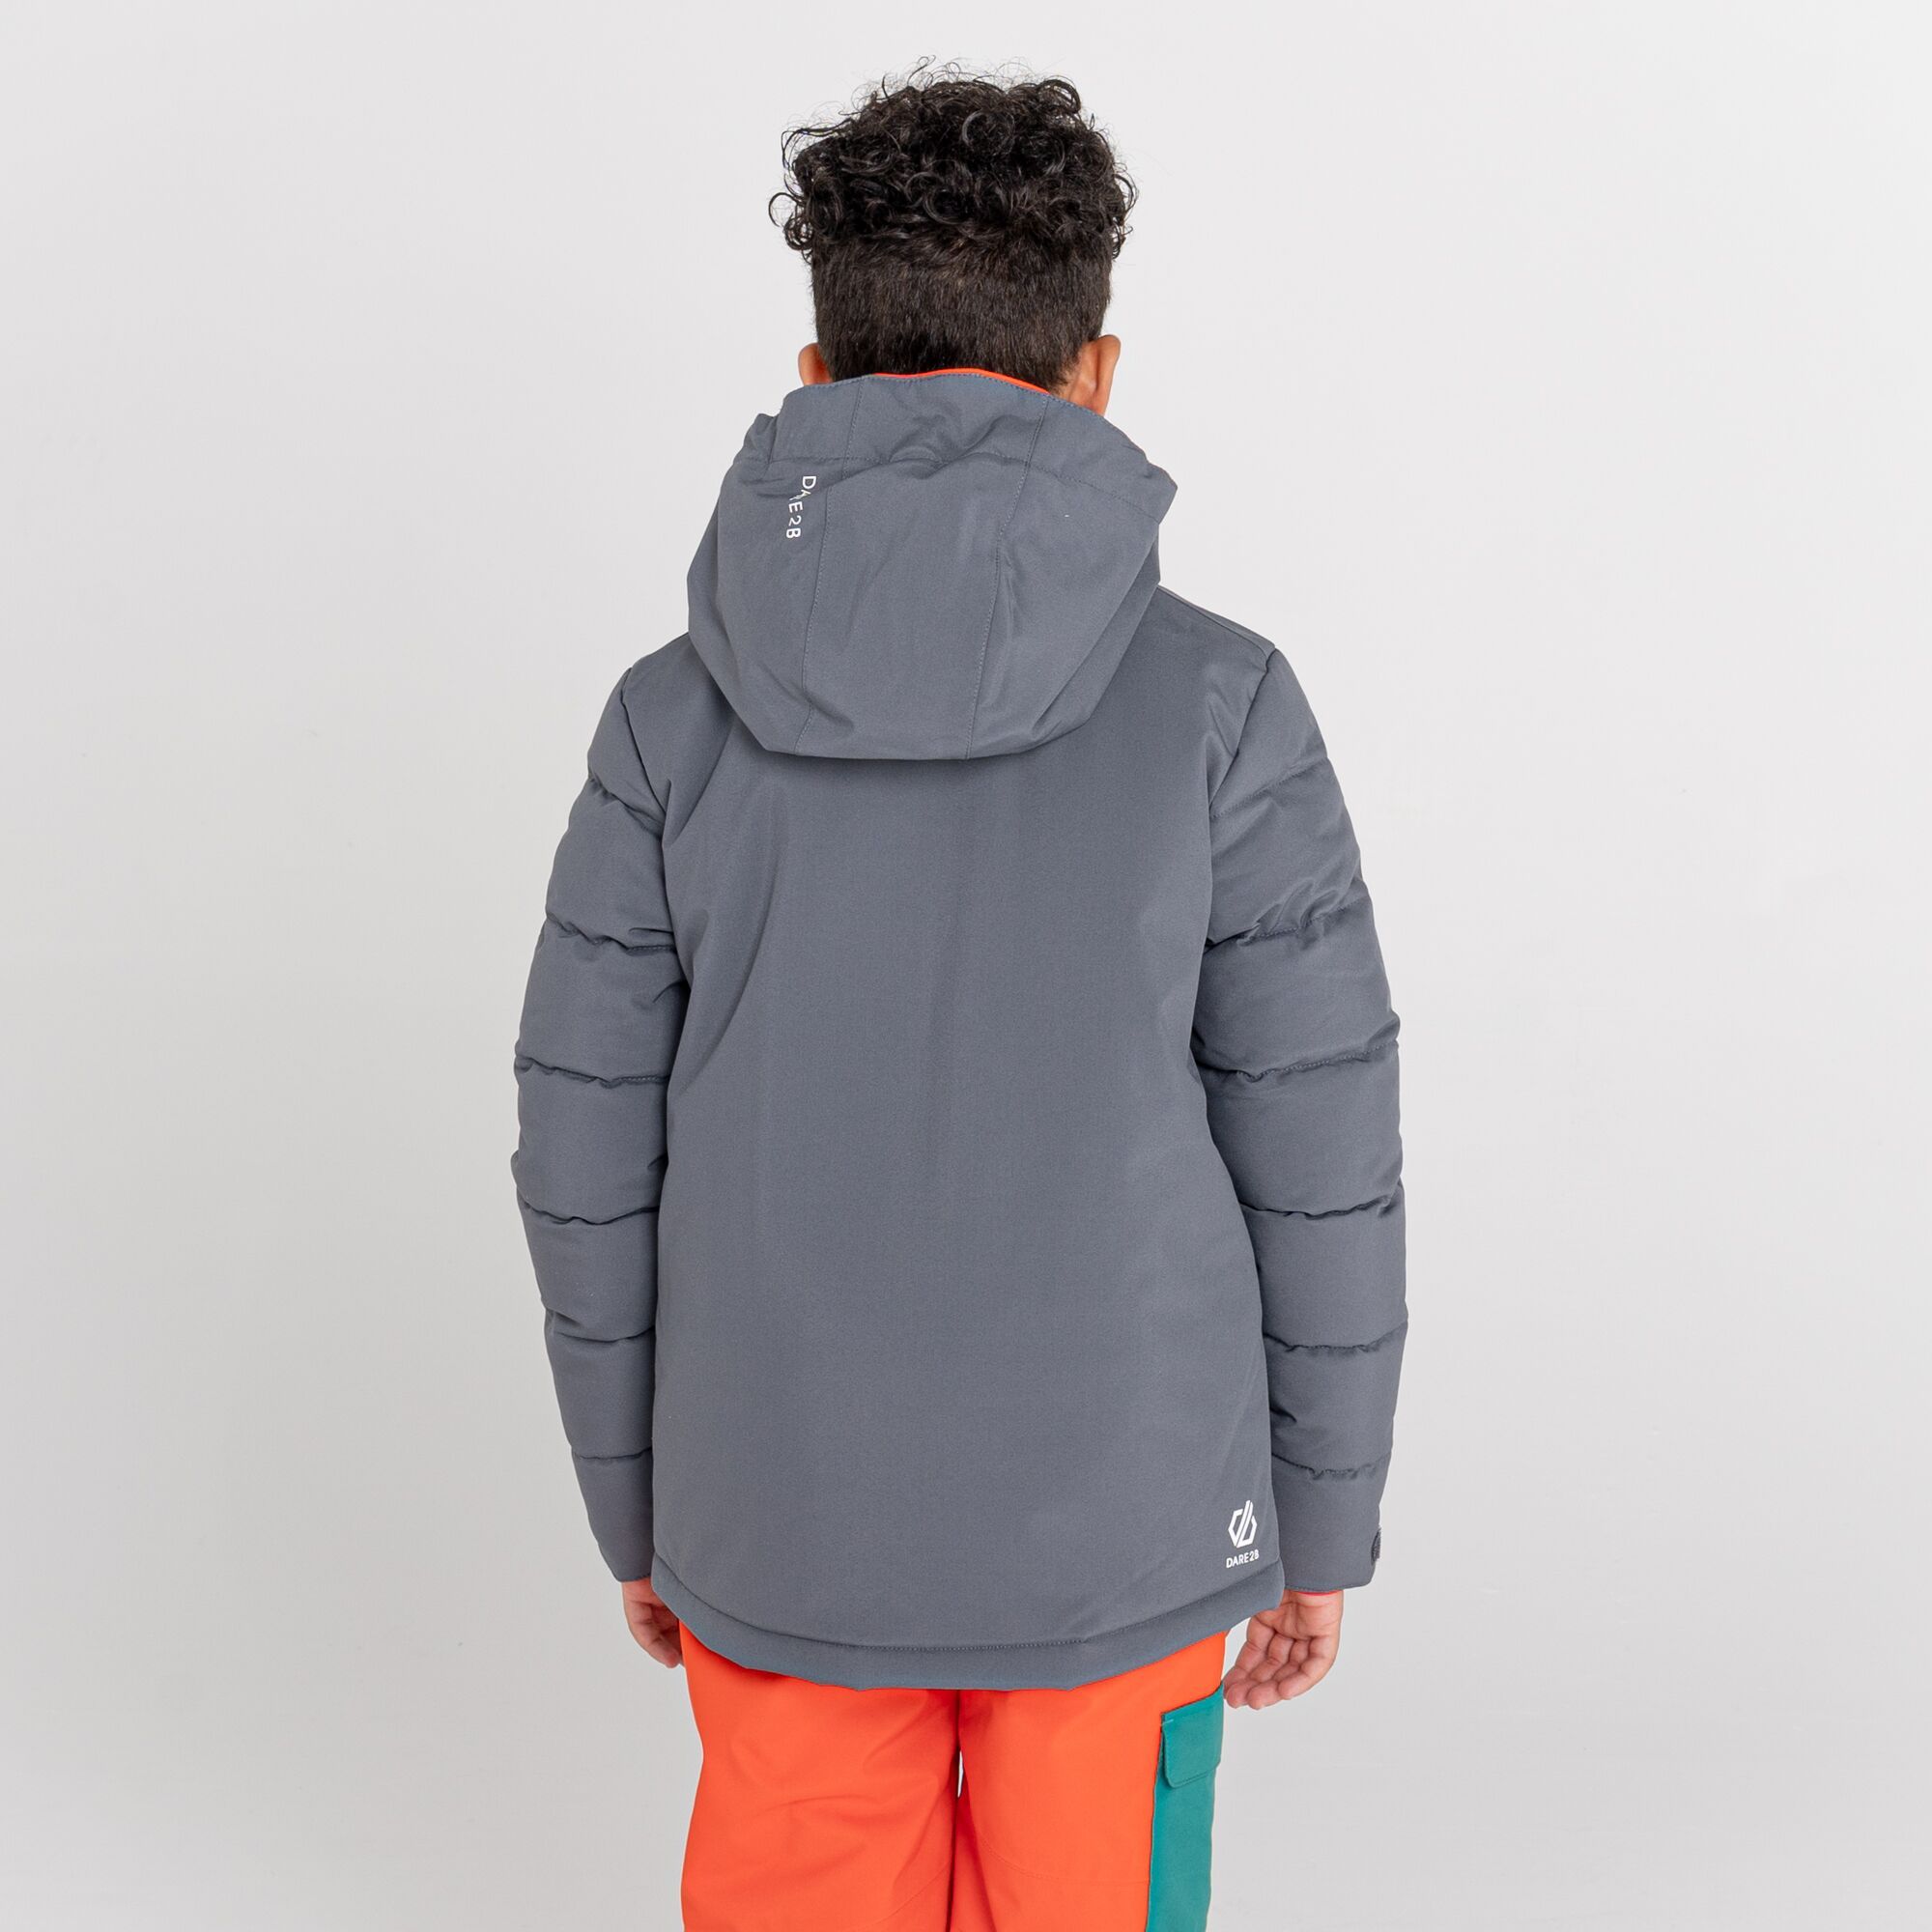  Ski & Snow Jackets -  dare 2b Cheerful Recycled Waterproof Insulated Ski Jacket